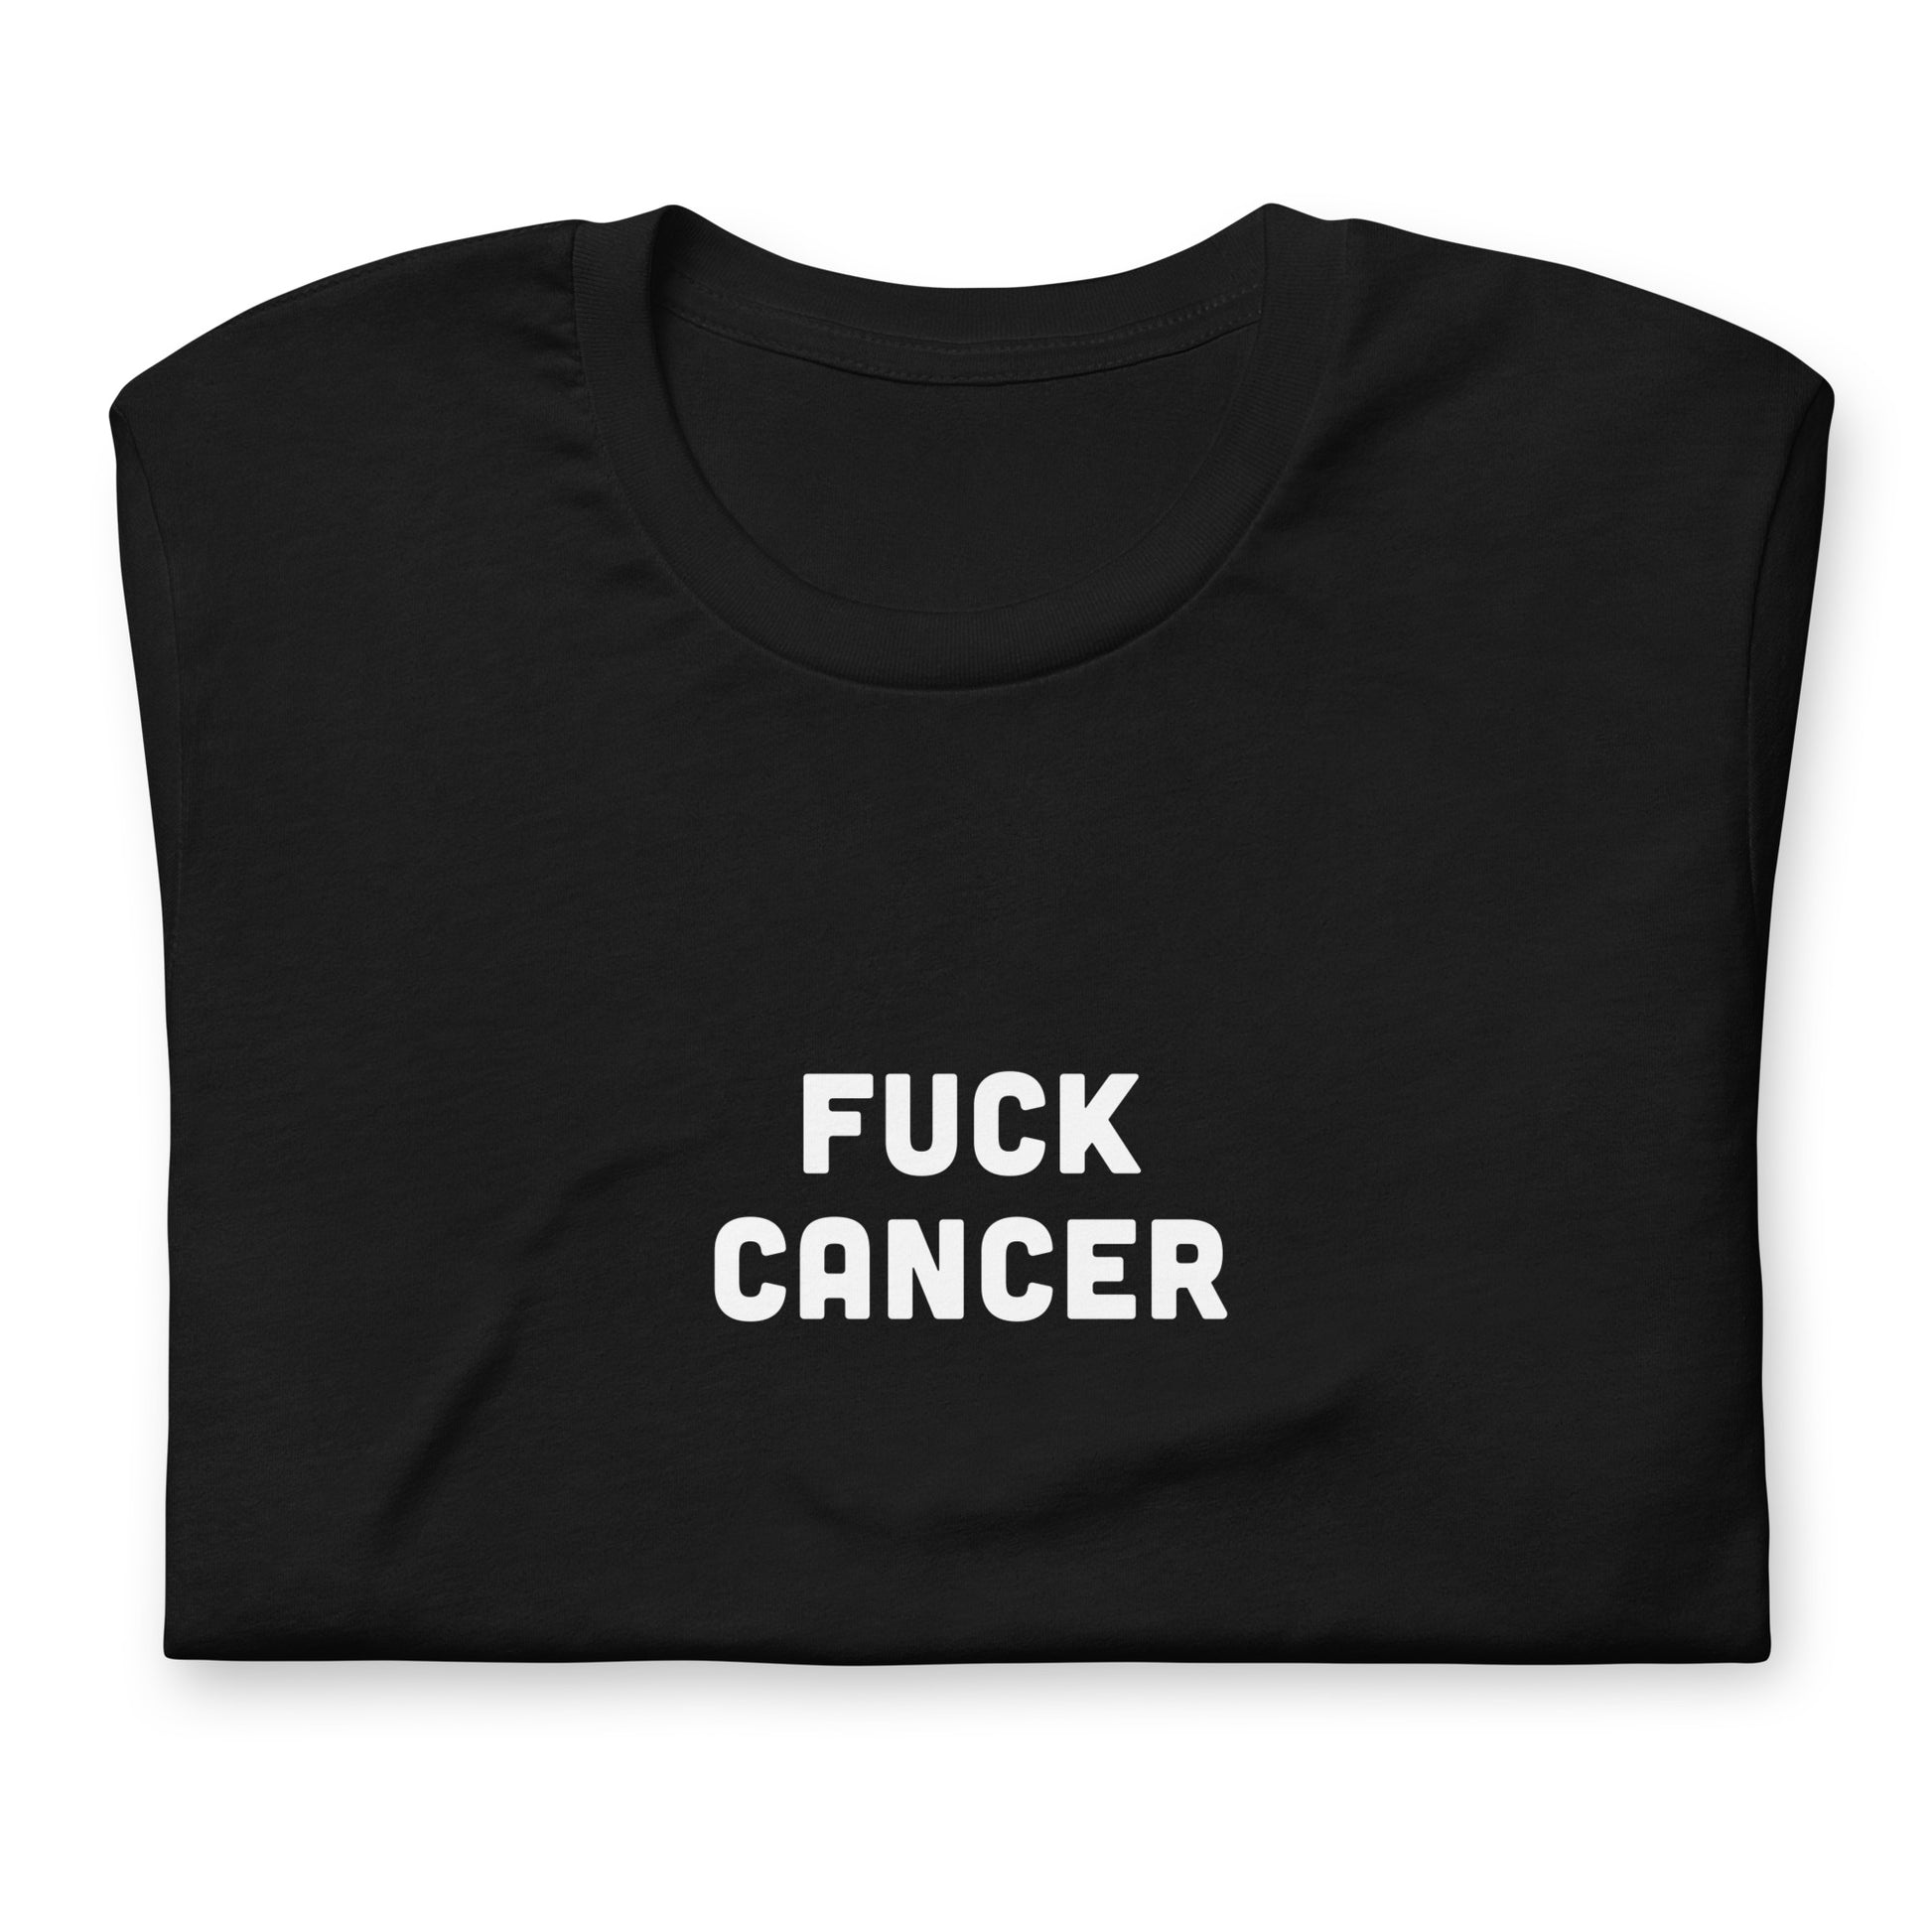 Fuck Cancer T-Shirt Size S Color Black